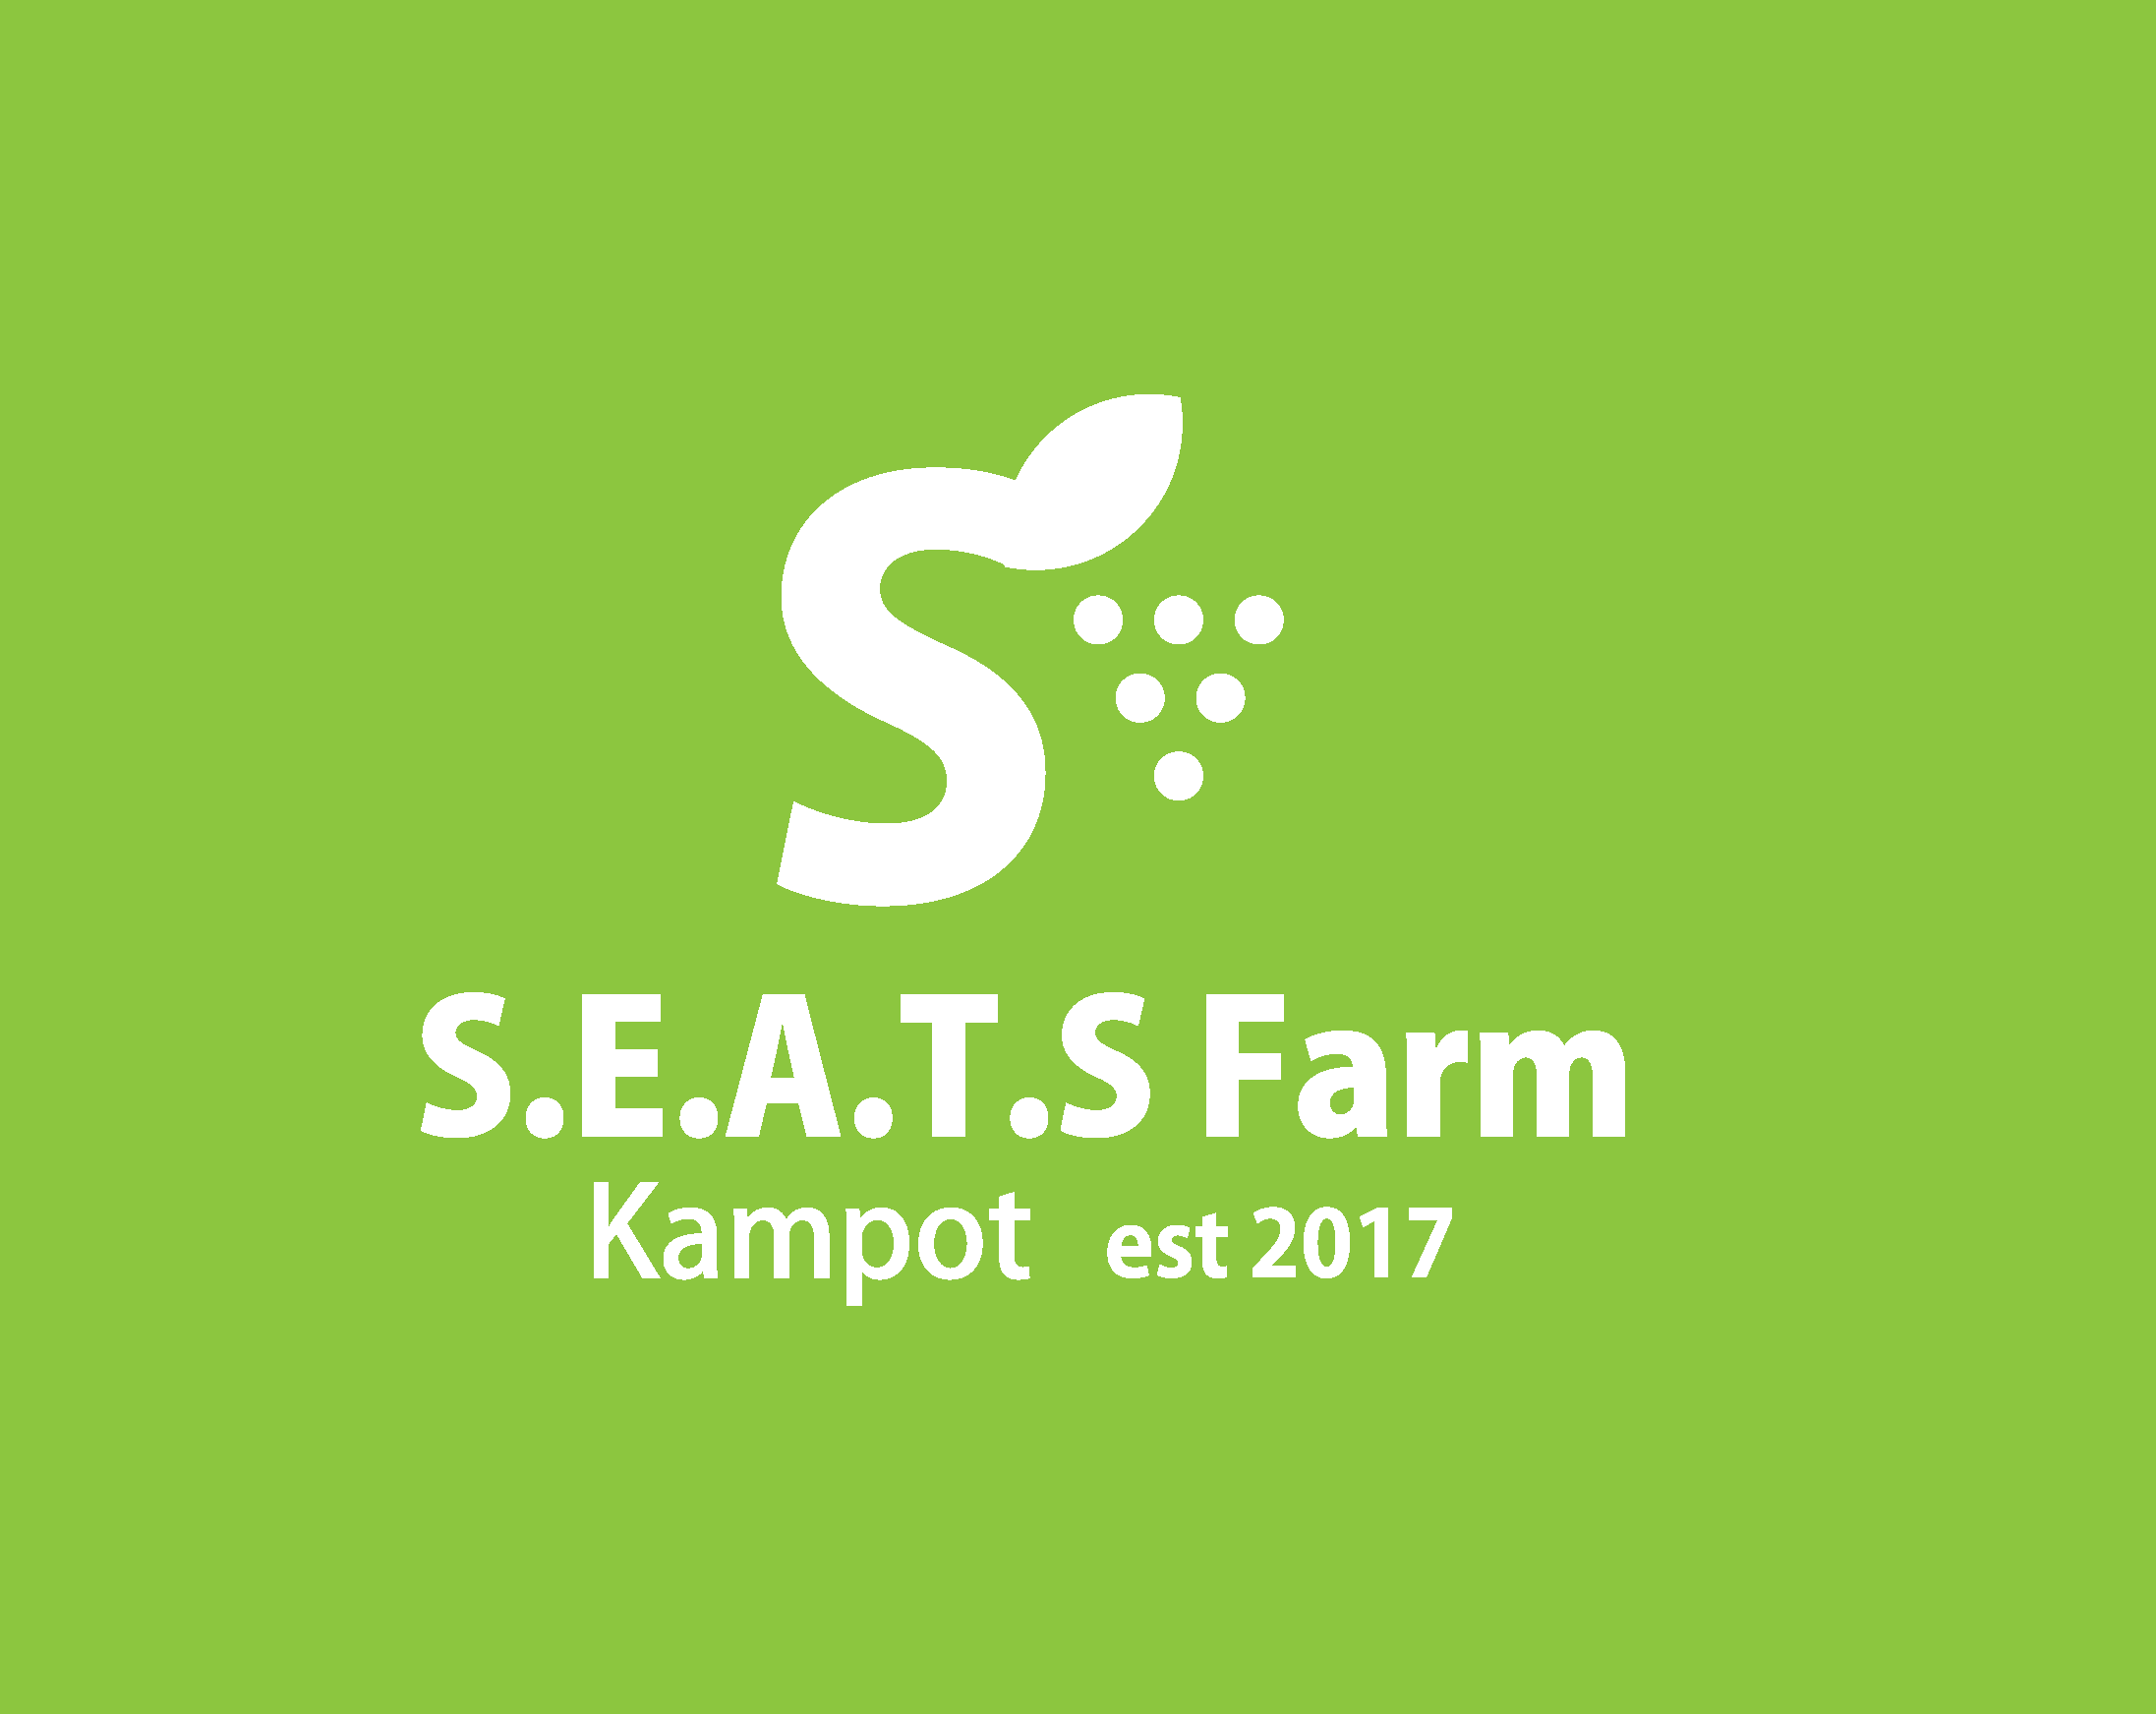 S.E.A.T.S Farm